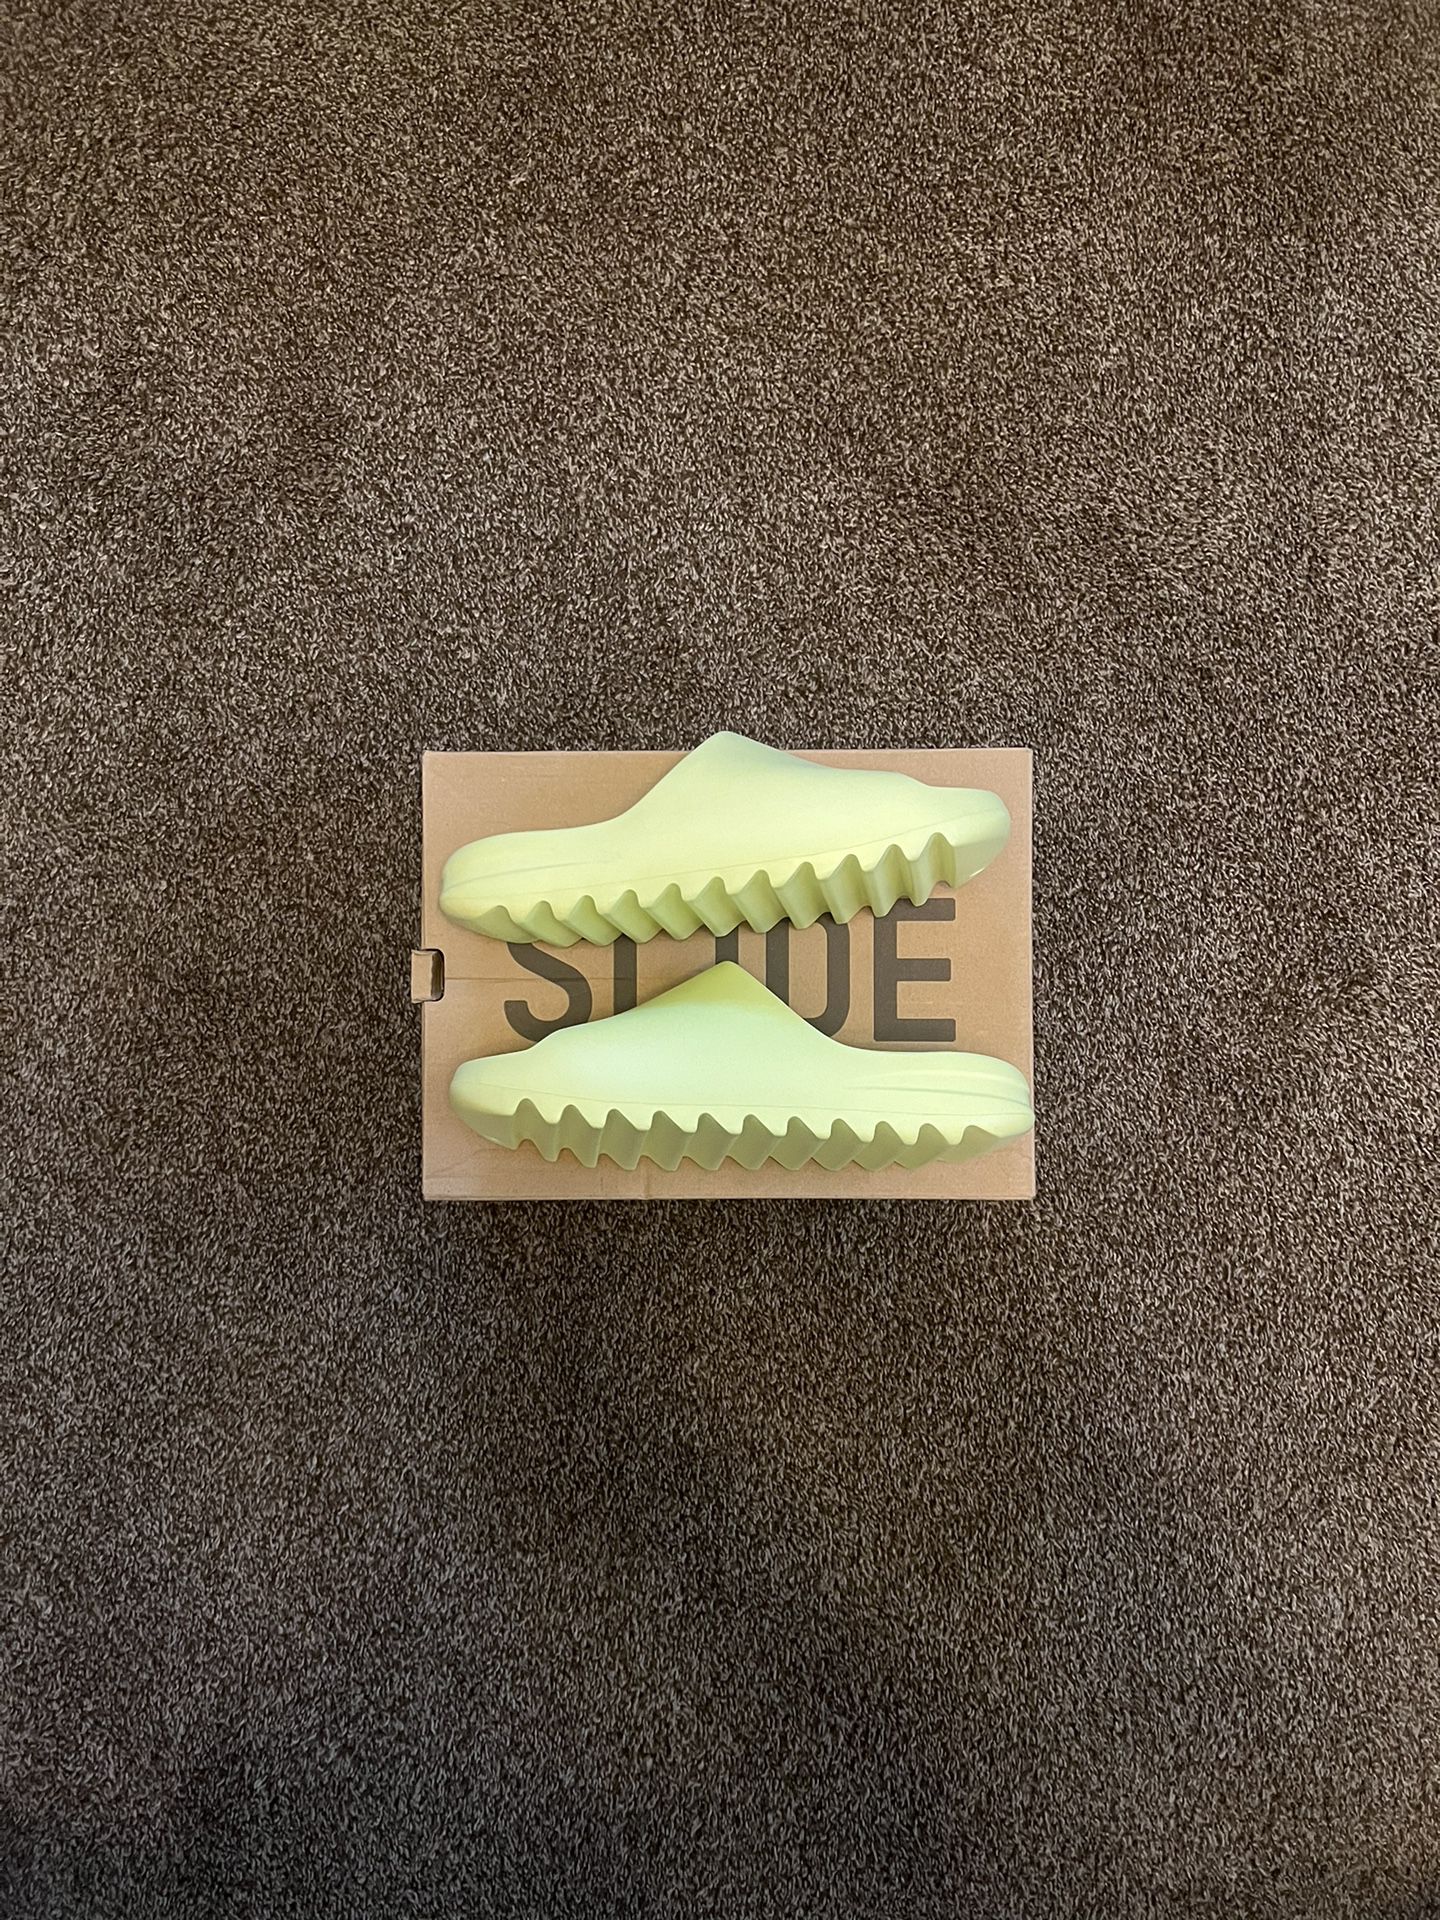 Adidas Yeezy Slide Glow Green Size 12